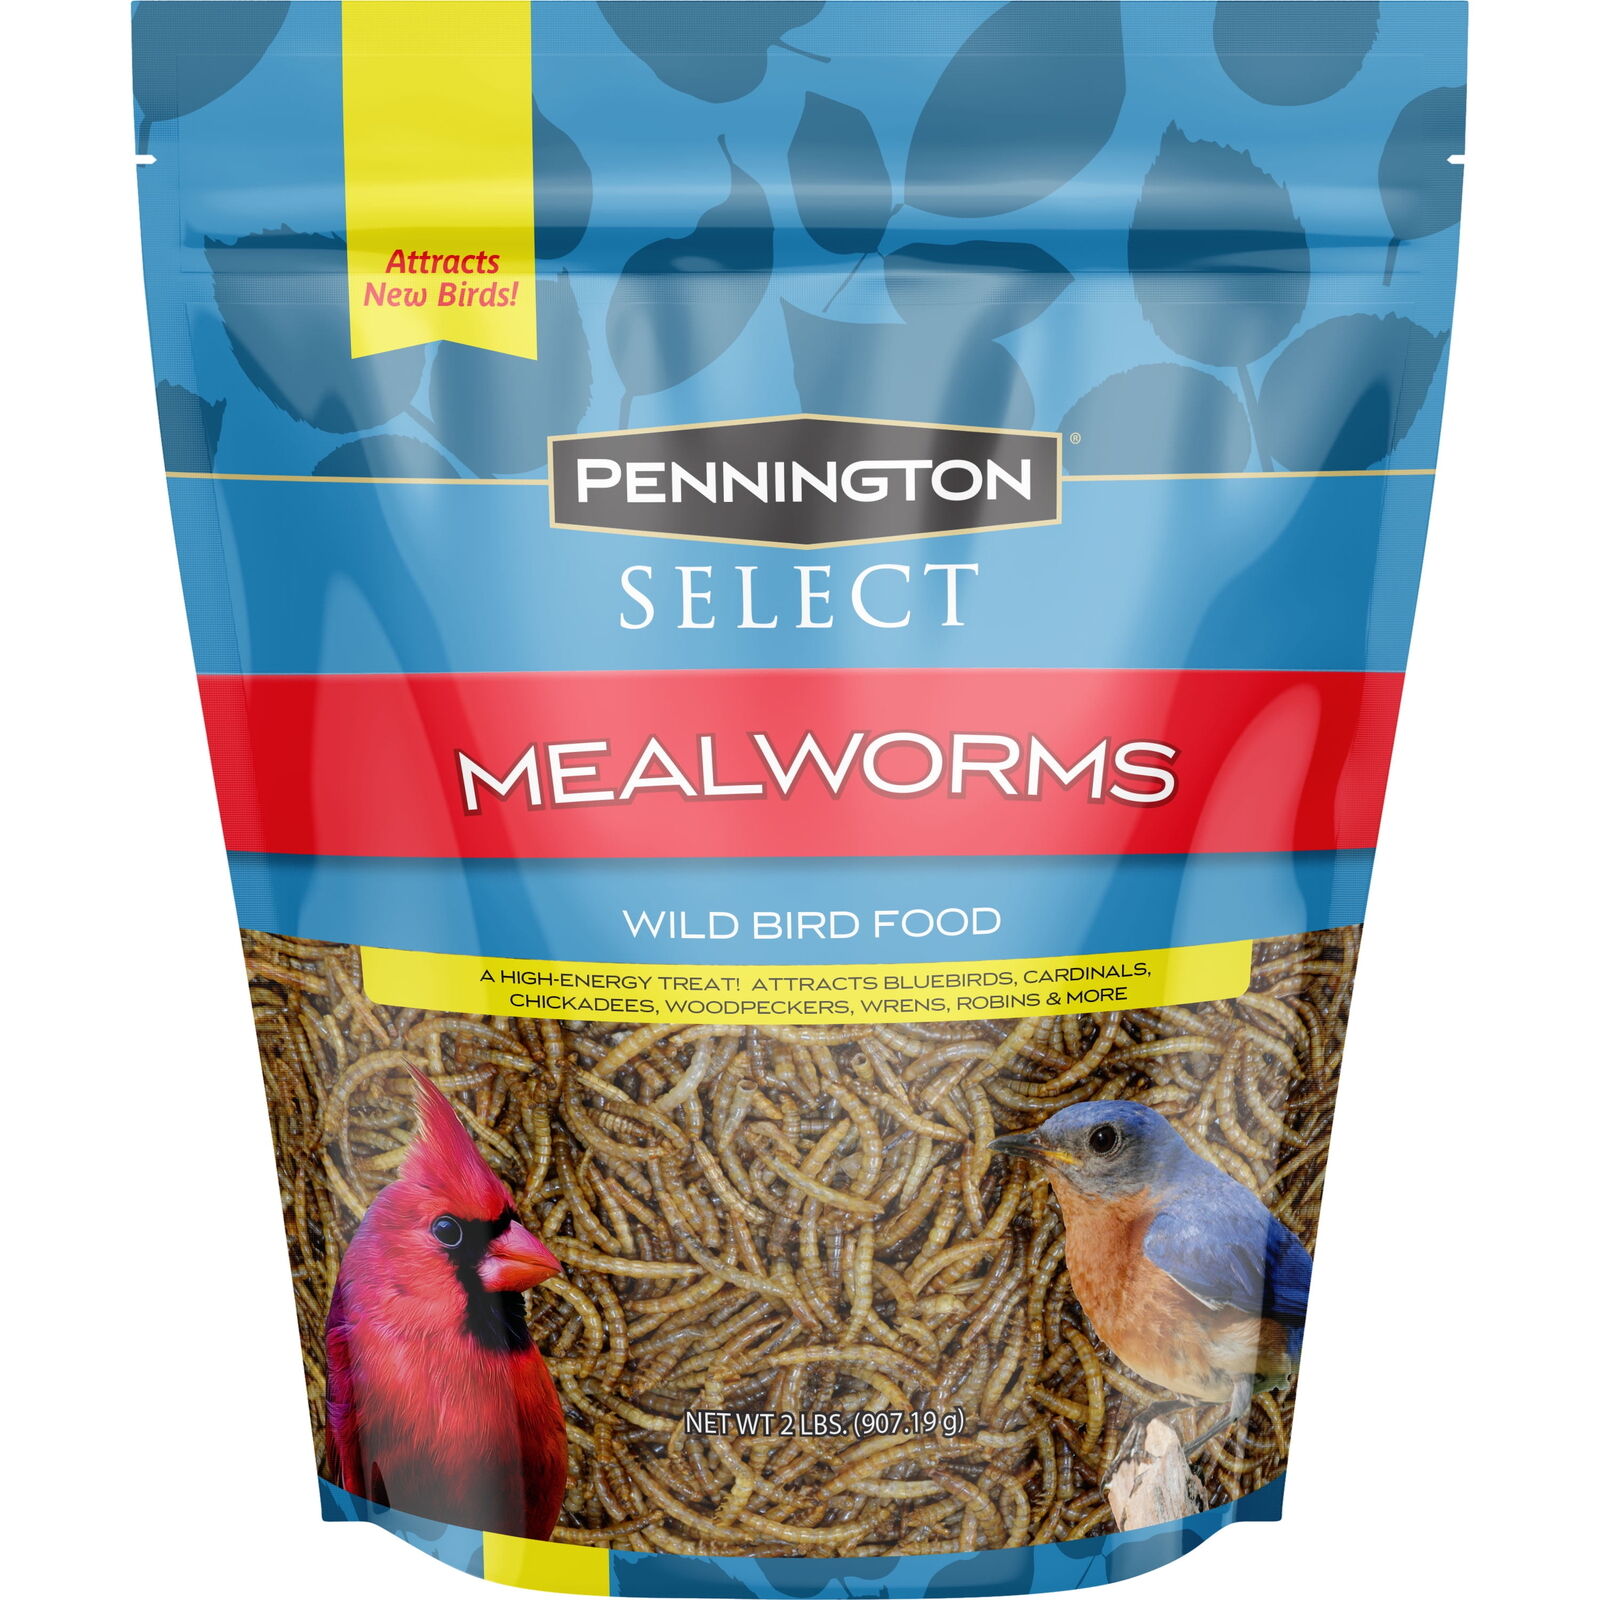 Pennington Mealworms, Bluebird and Wild Bird Food, 2 lb. Bag, 1 Pack, Dry